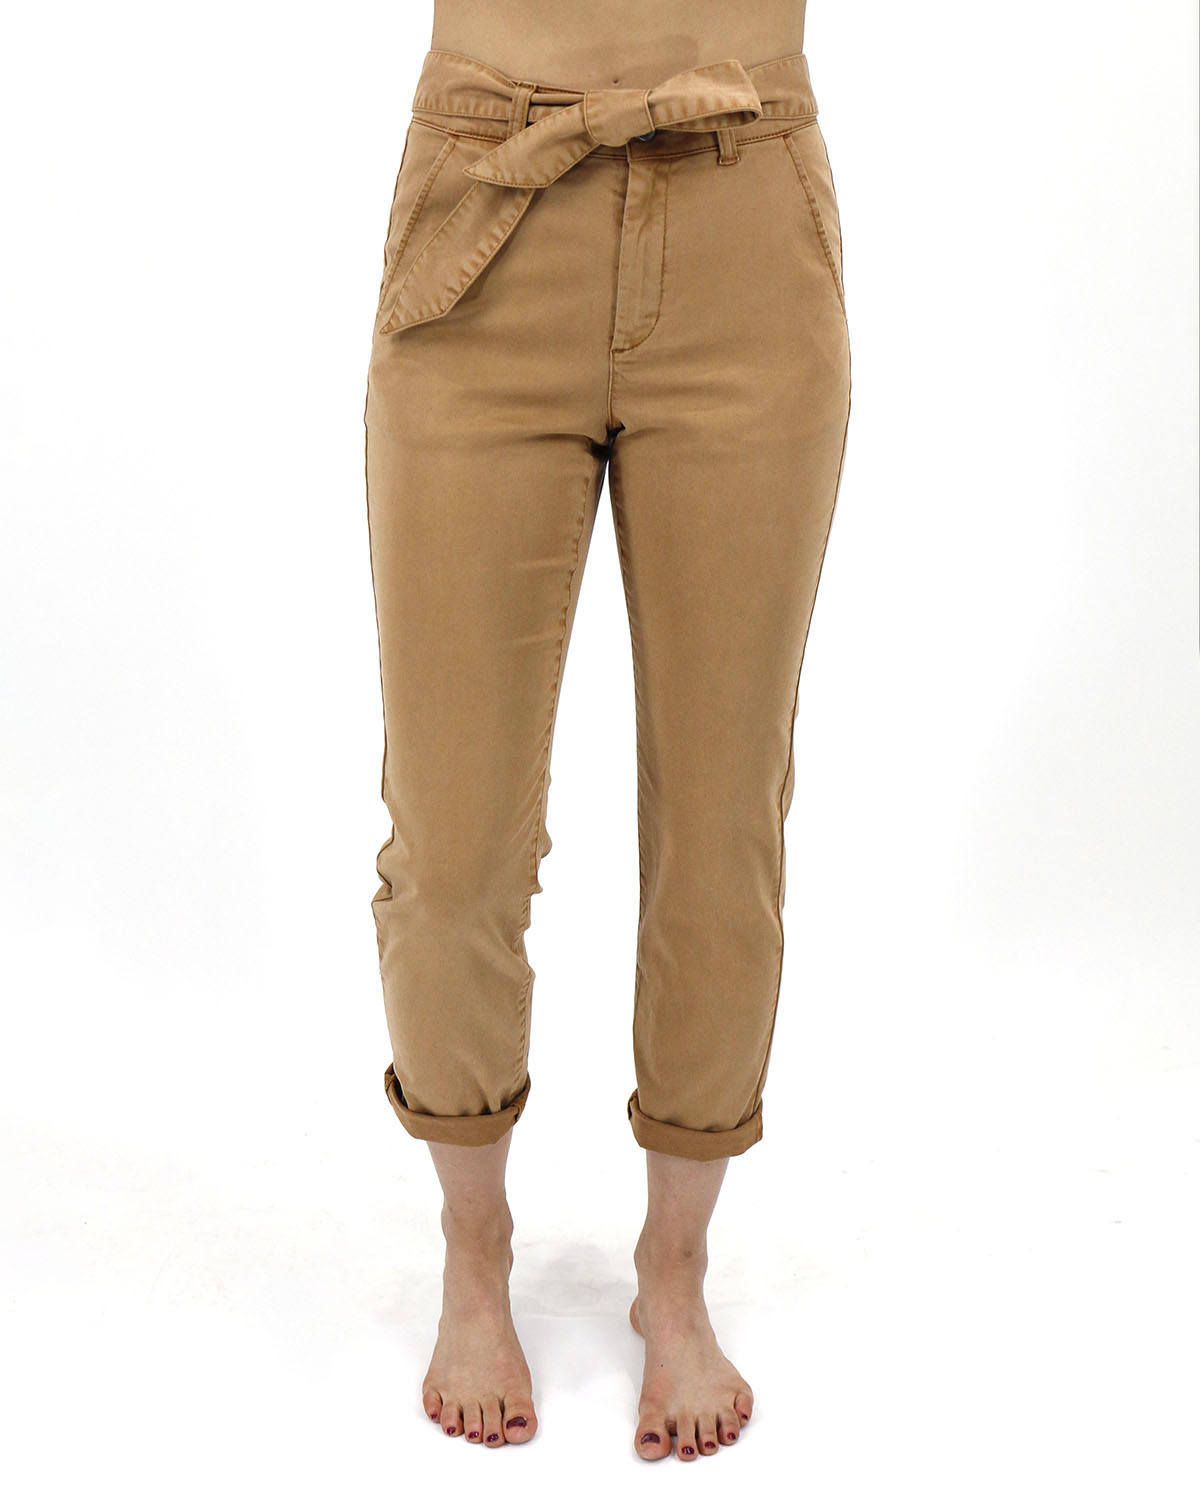 Quince Women's Rust Stretch Cotton Twill Wide-Leg Crop Pants sz 31  Brown-Orange